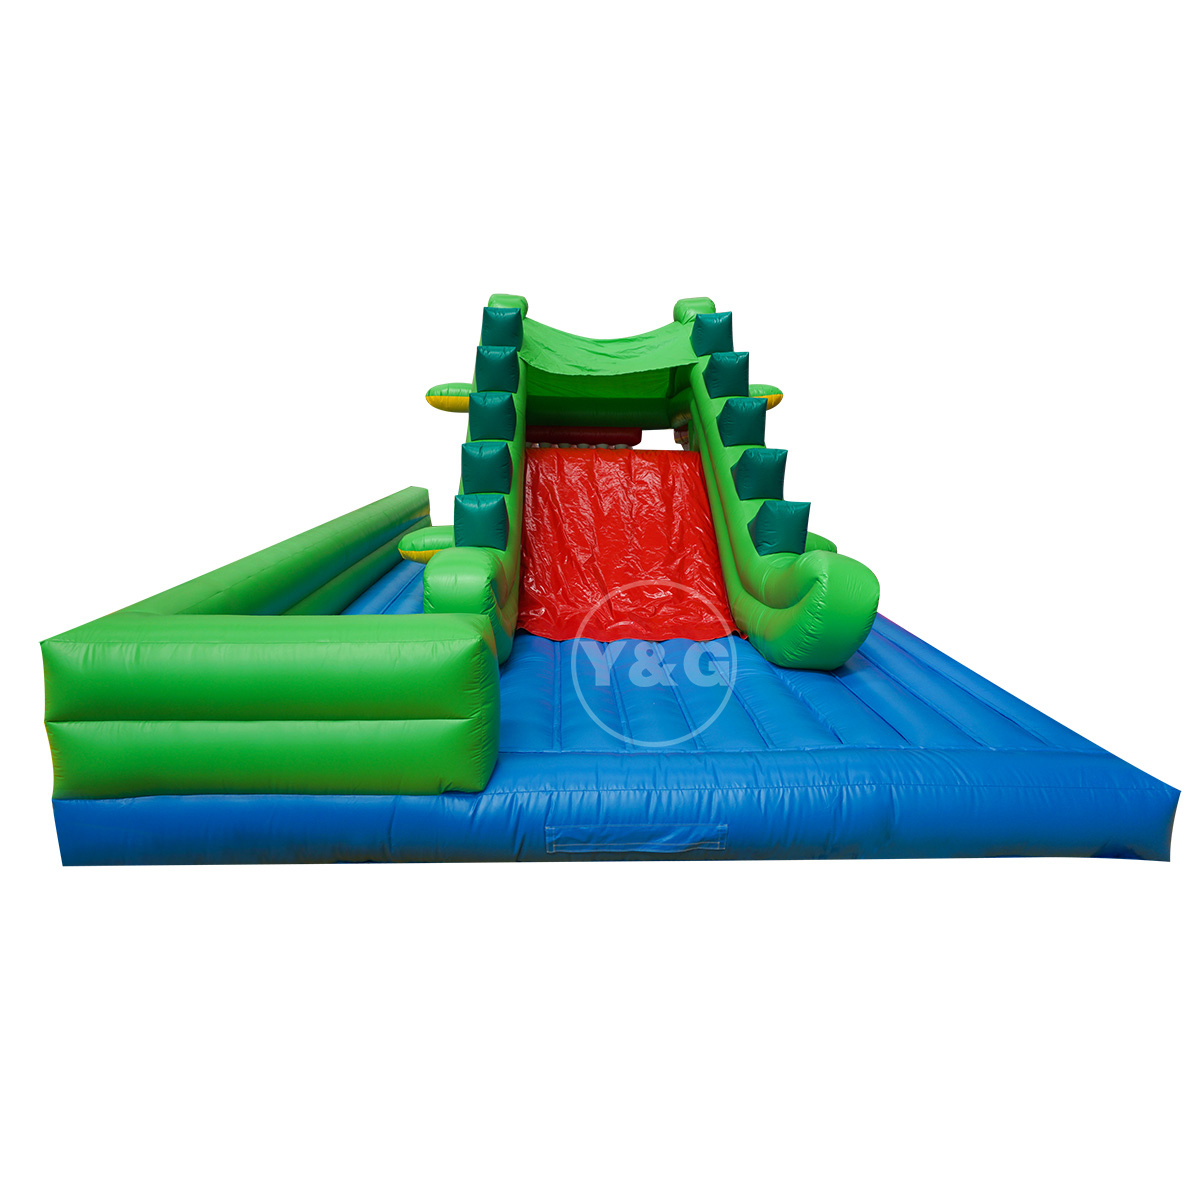 Crocodile bouncy castle slideYG-99